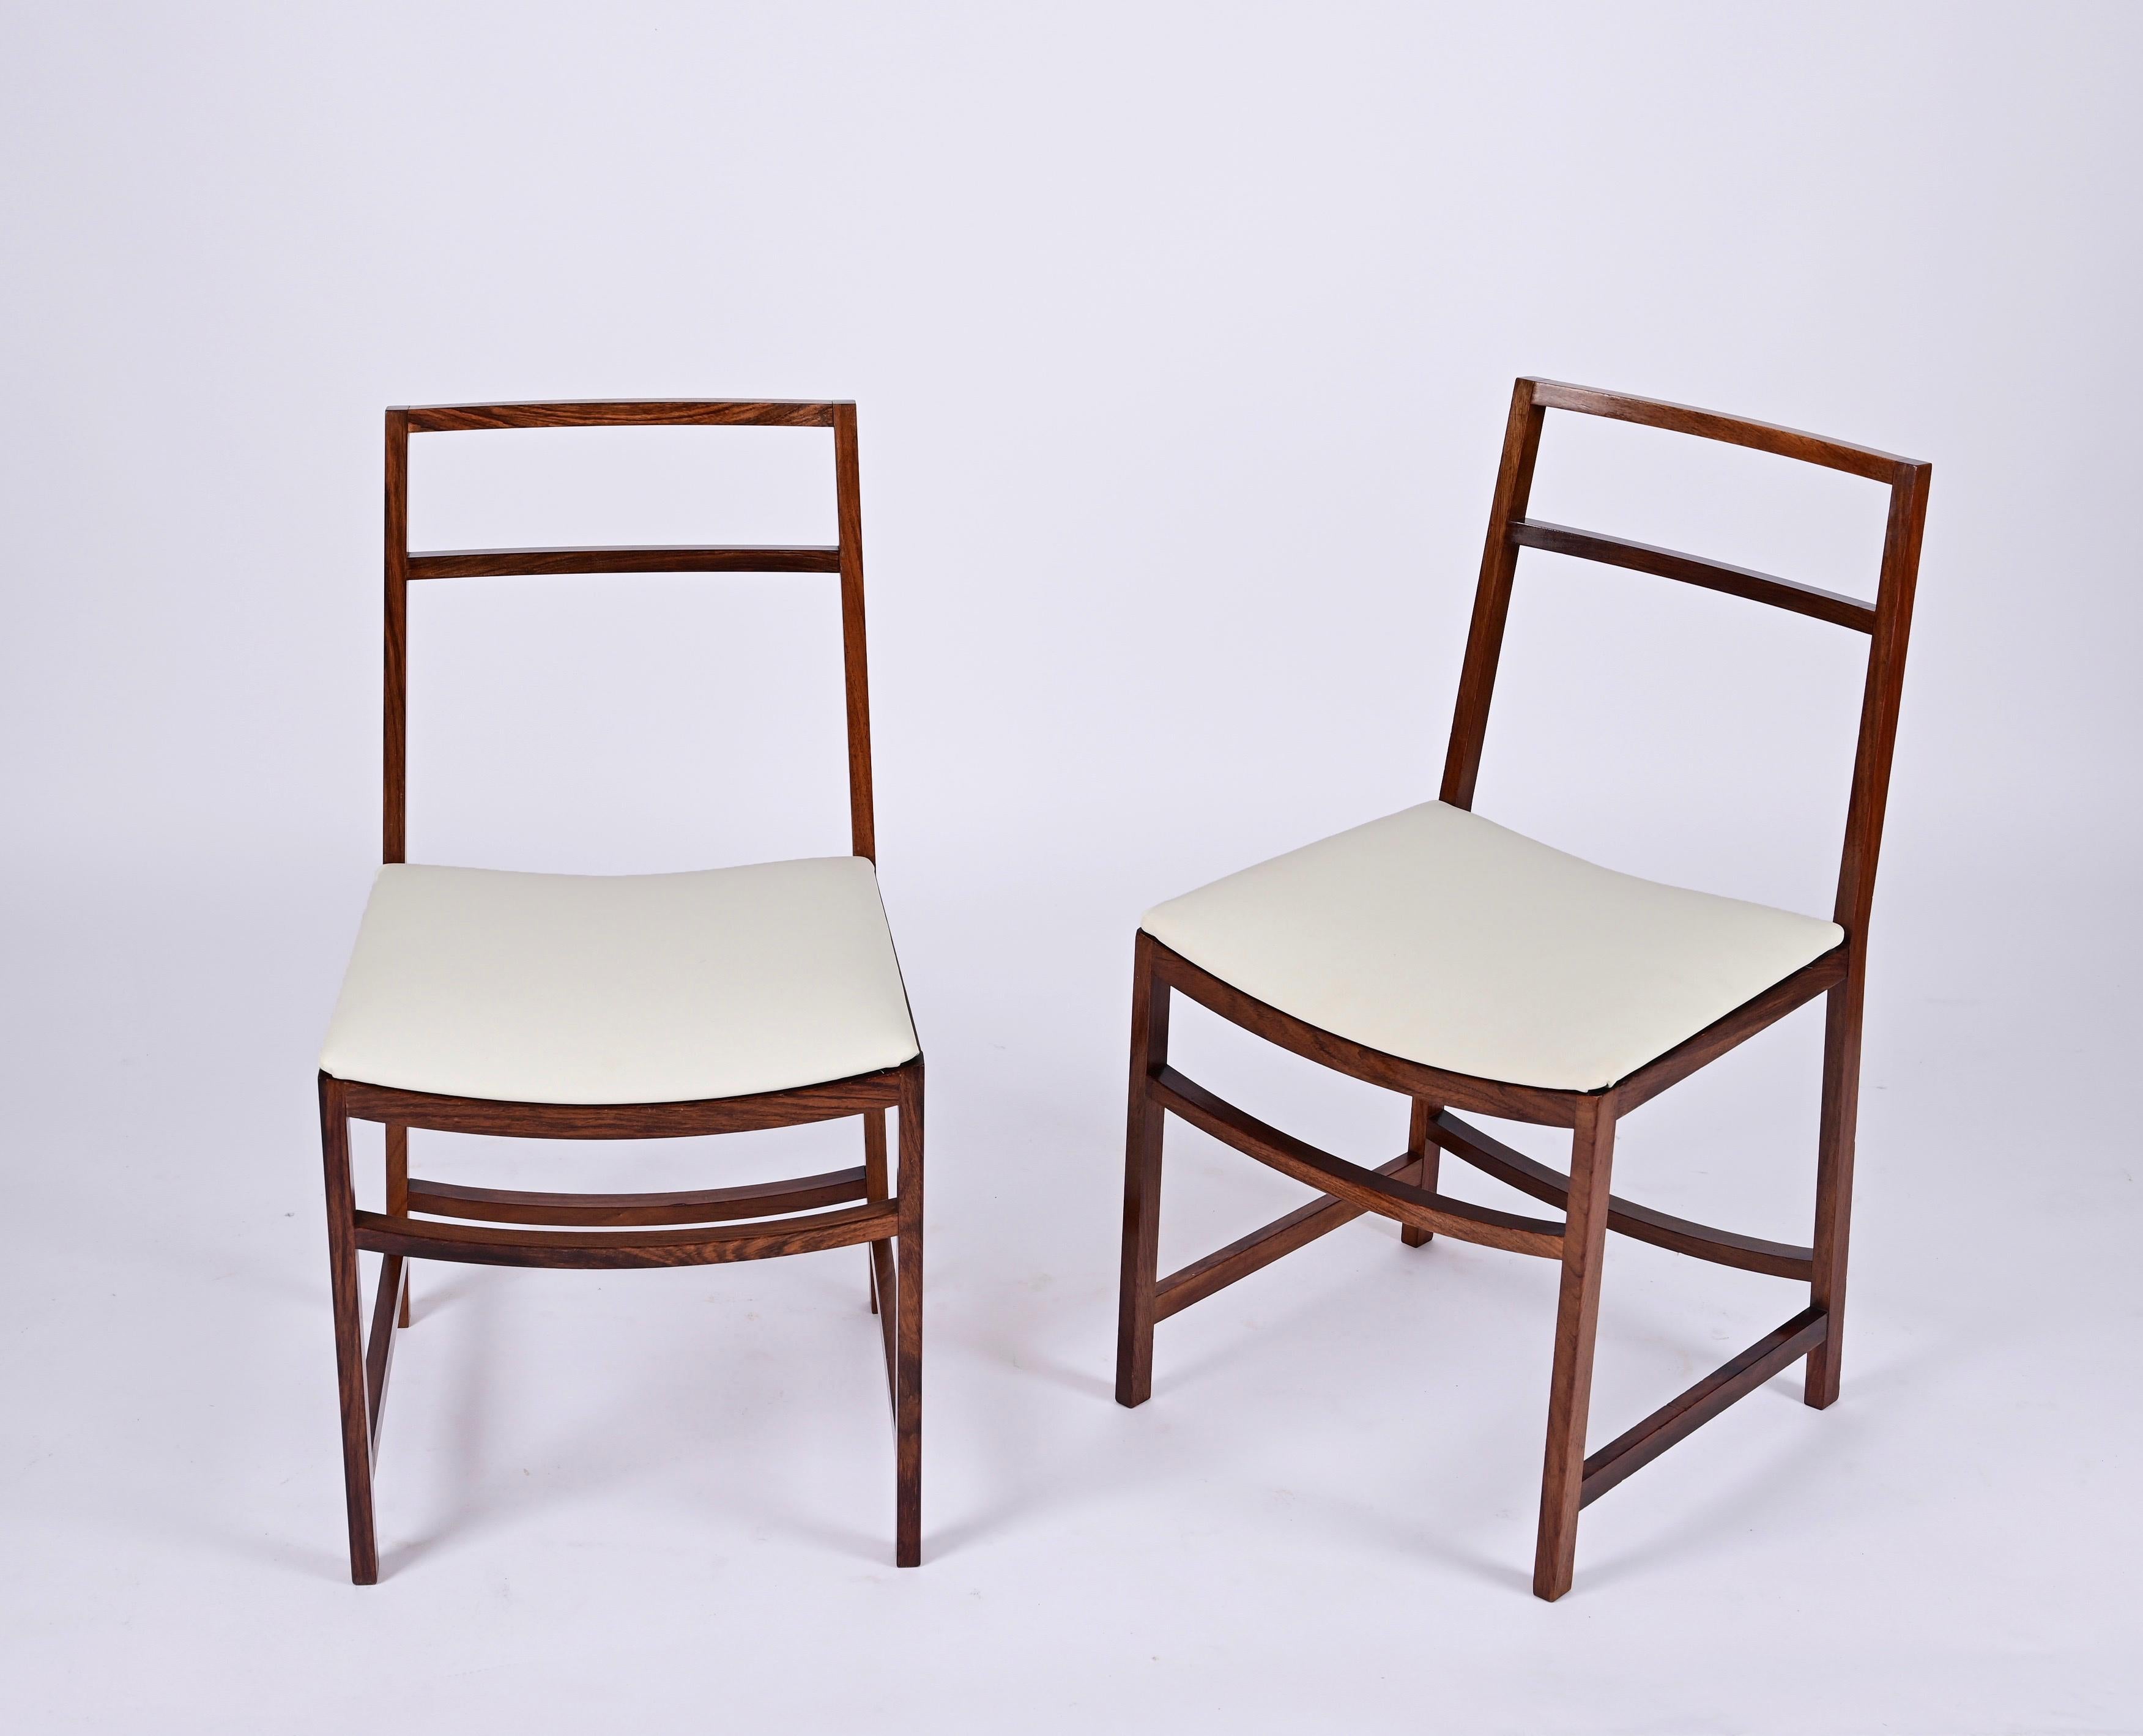 Midcentury Italian Dining Chairs in Teak, Renato Venturi for MIM Roma, 1960s For Sale 4